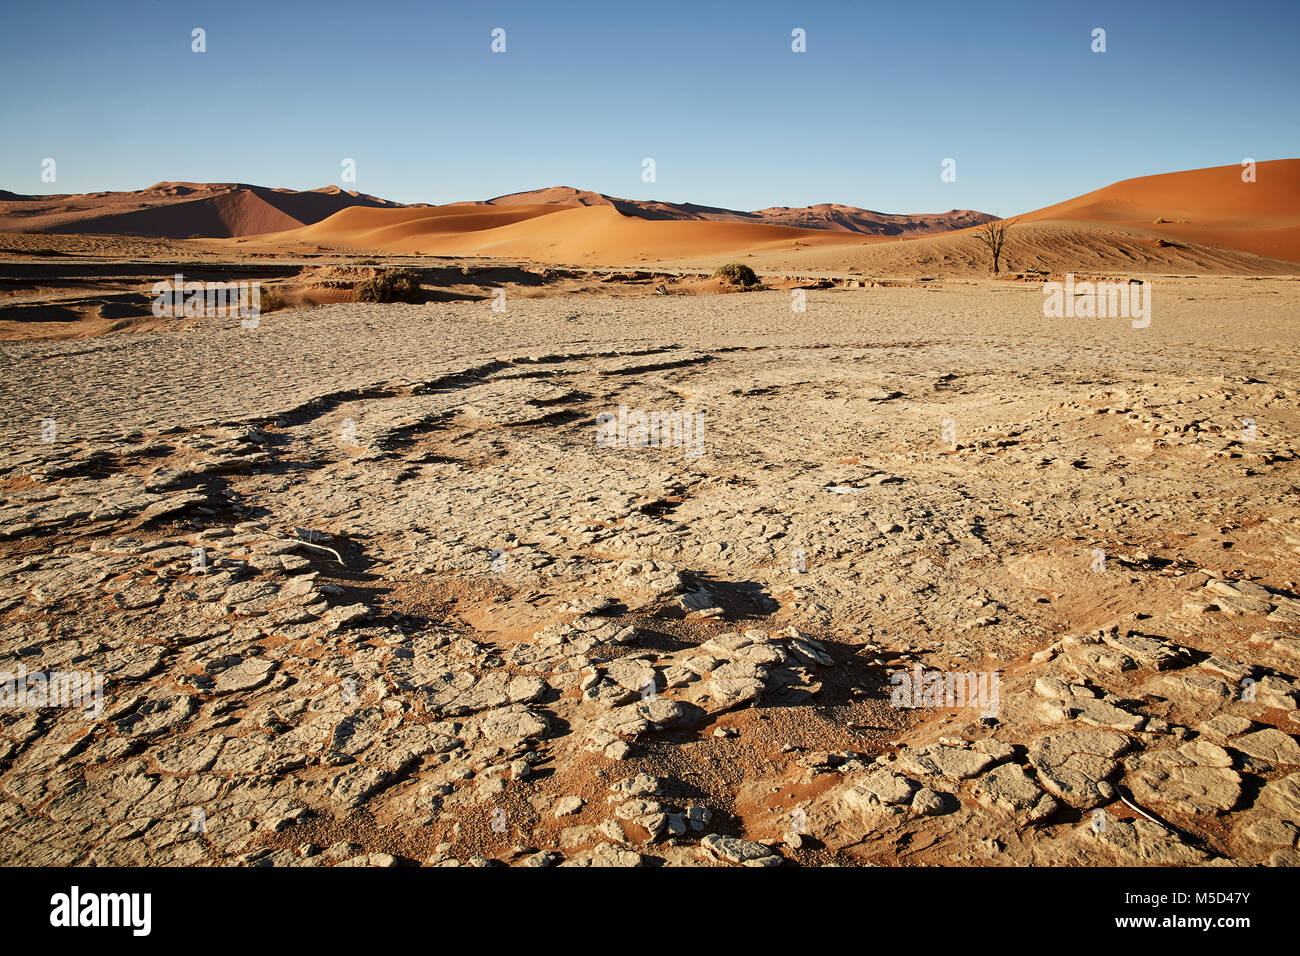 Essiccata la terra nella parte anteriore delle dune di sabbia, sale teglie di argilla, Sossusvlei, Namib Desert, Namib-Naukluft National Park, Namibia Foto Stock